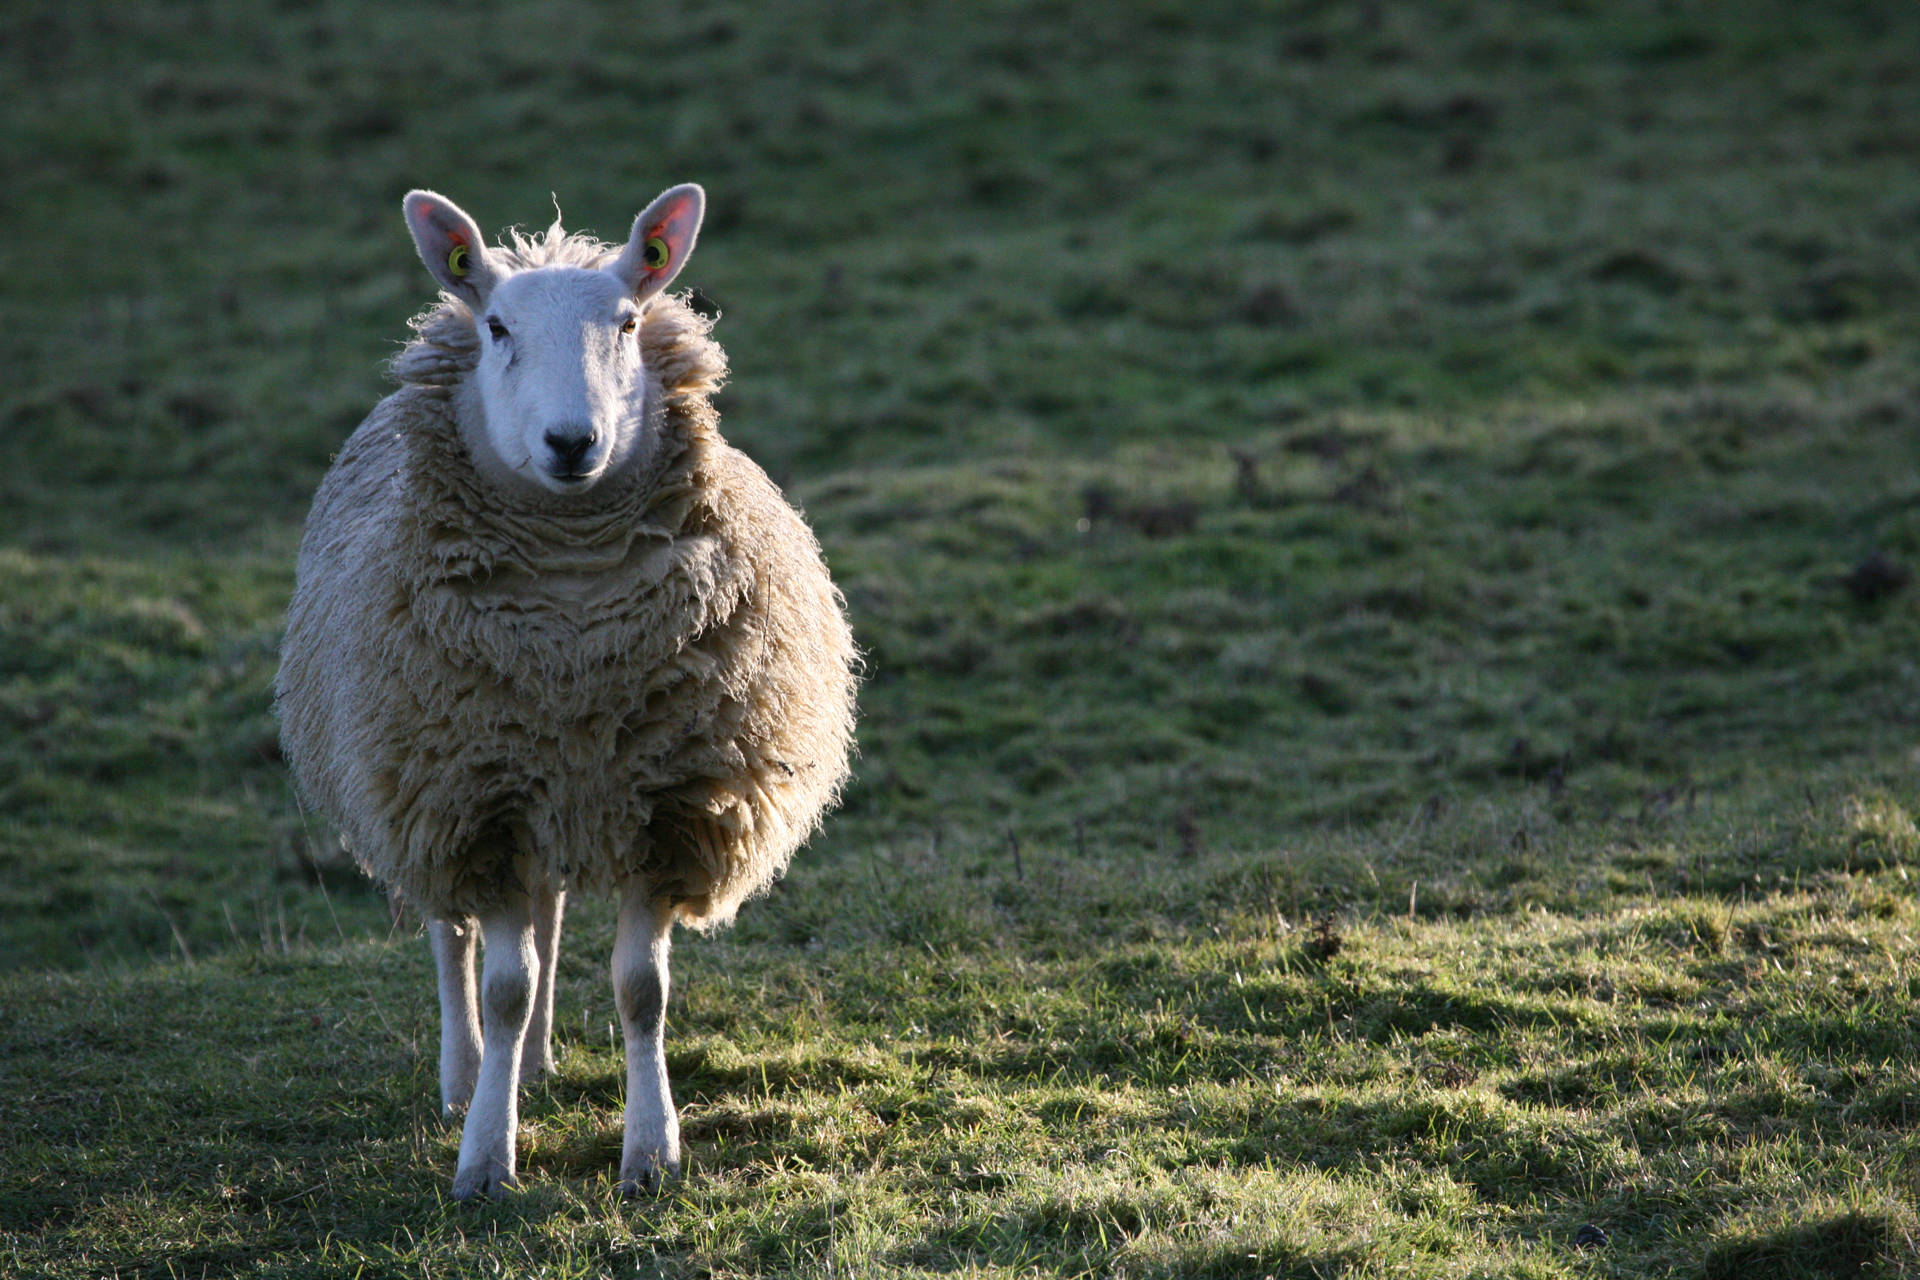 Sheep In Grass Field